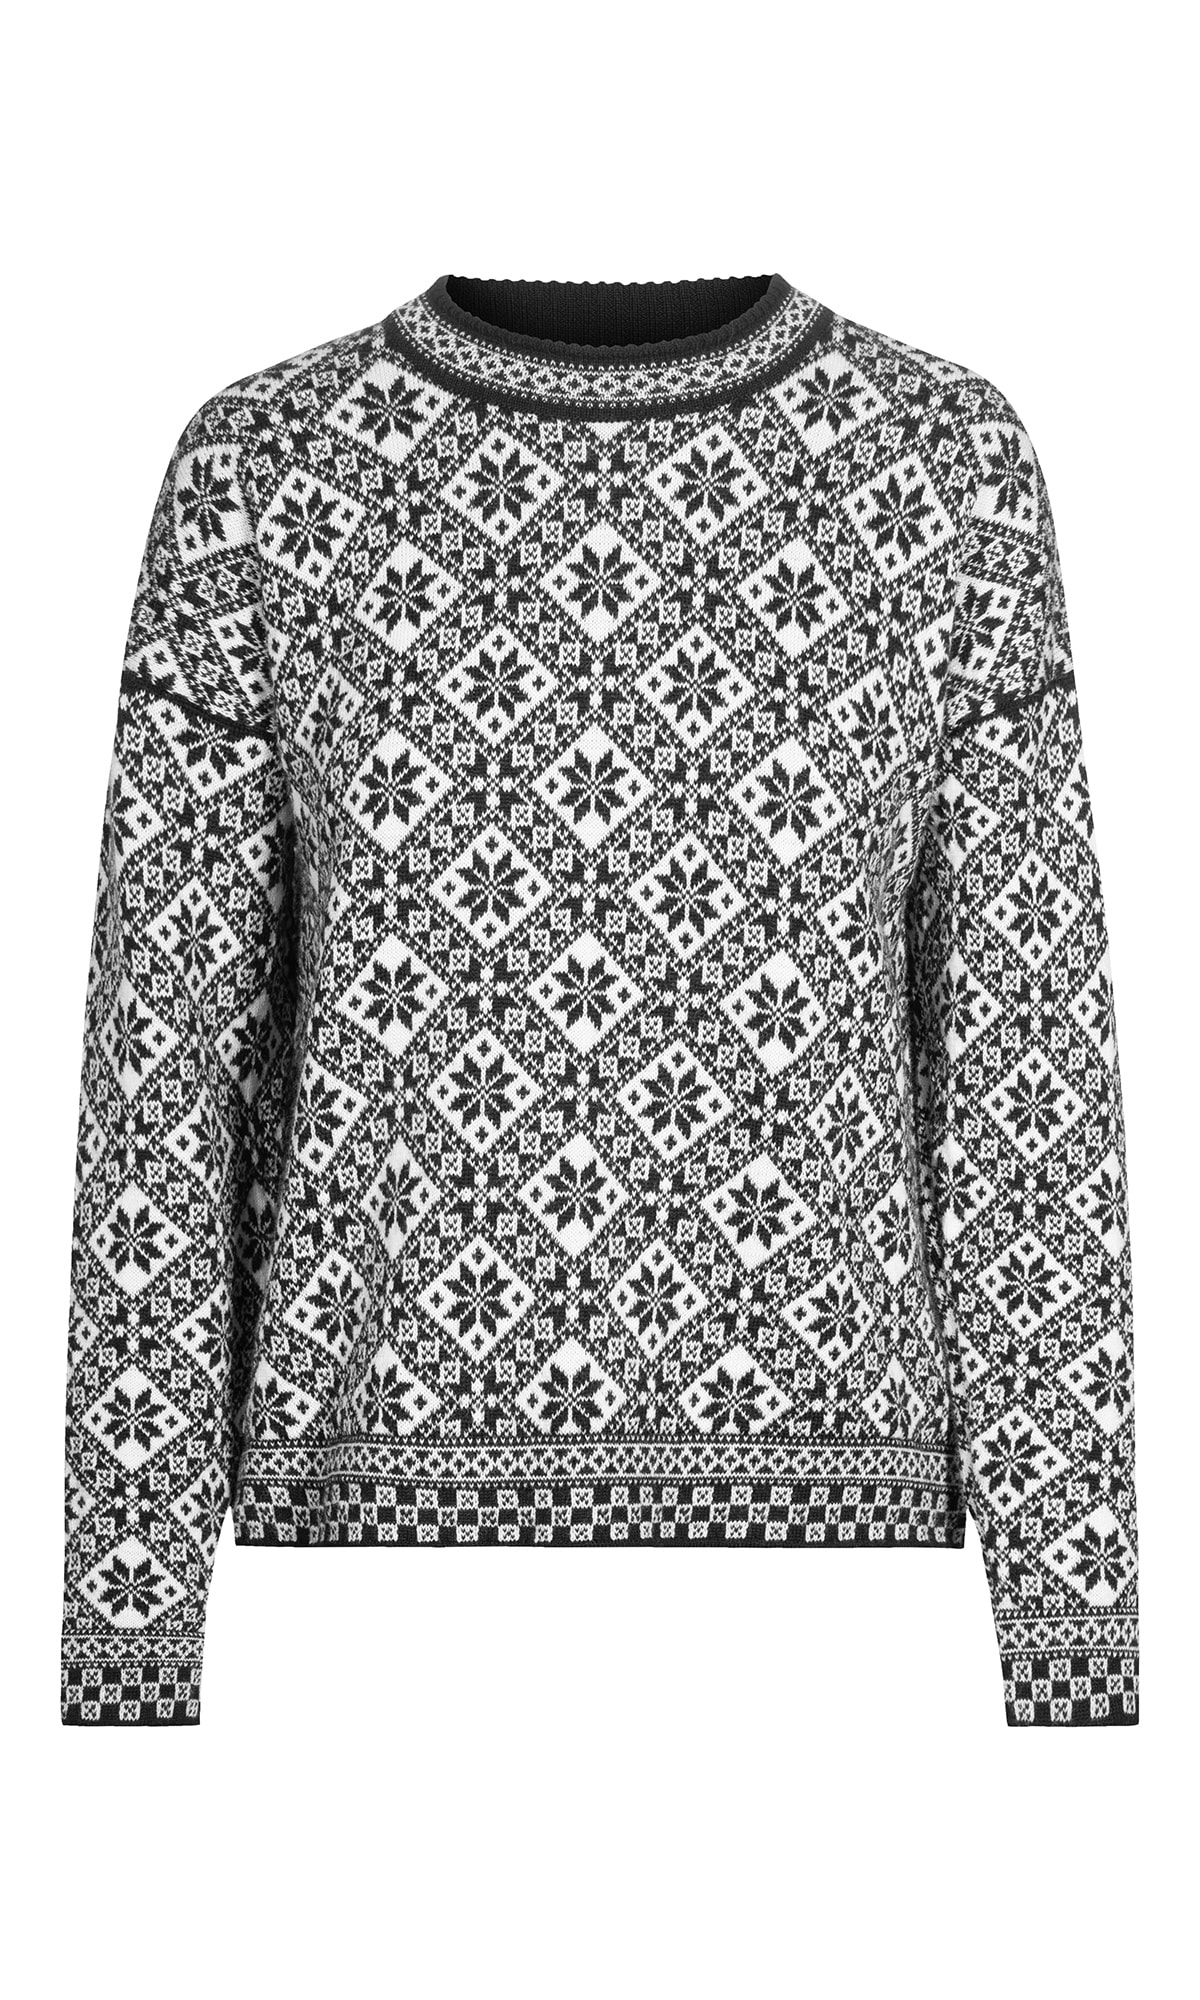 Bjorøy Sweater - Women - Black/Offwhite - Dale of Norway - Dale of Norway